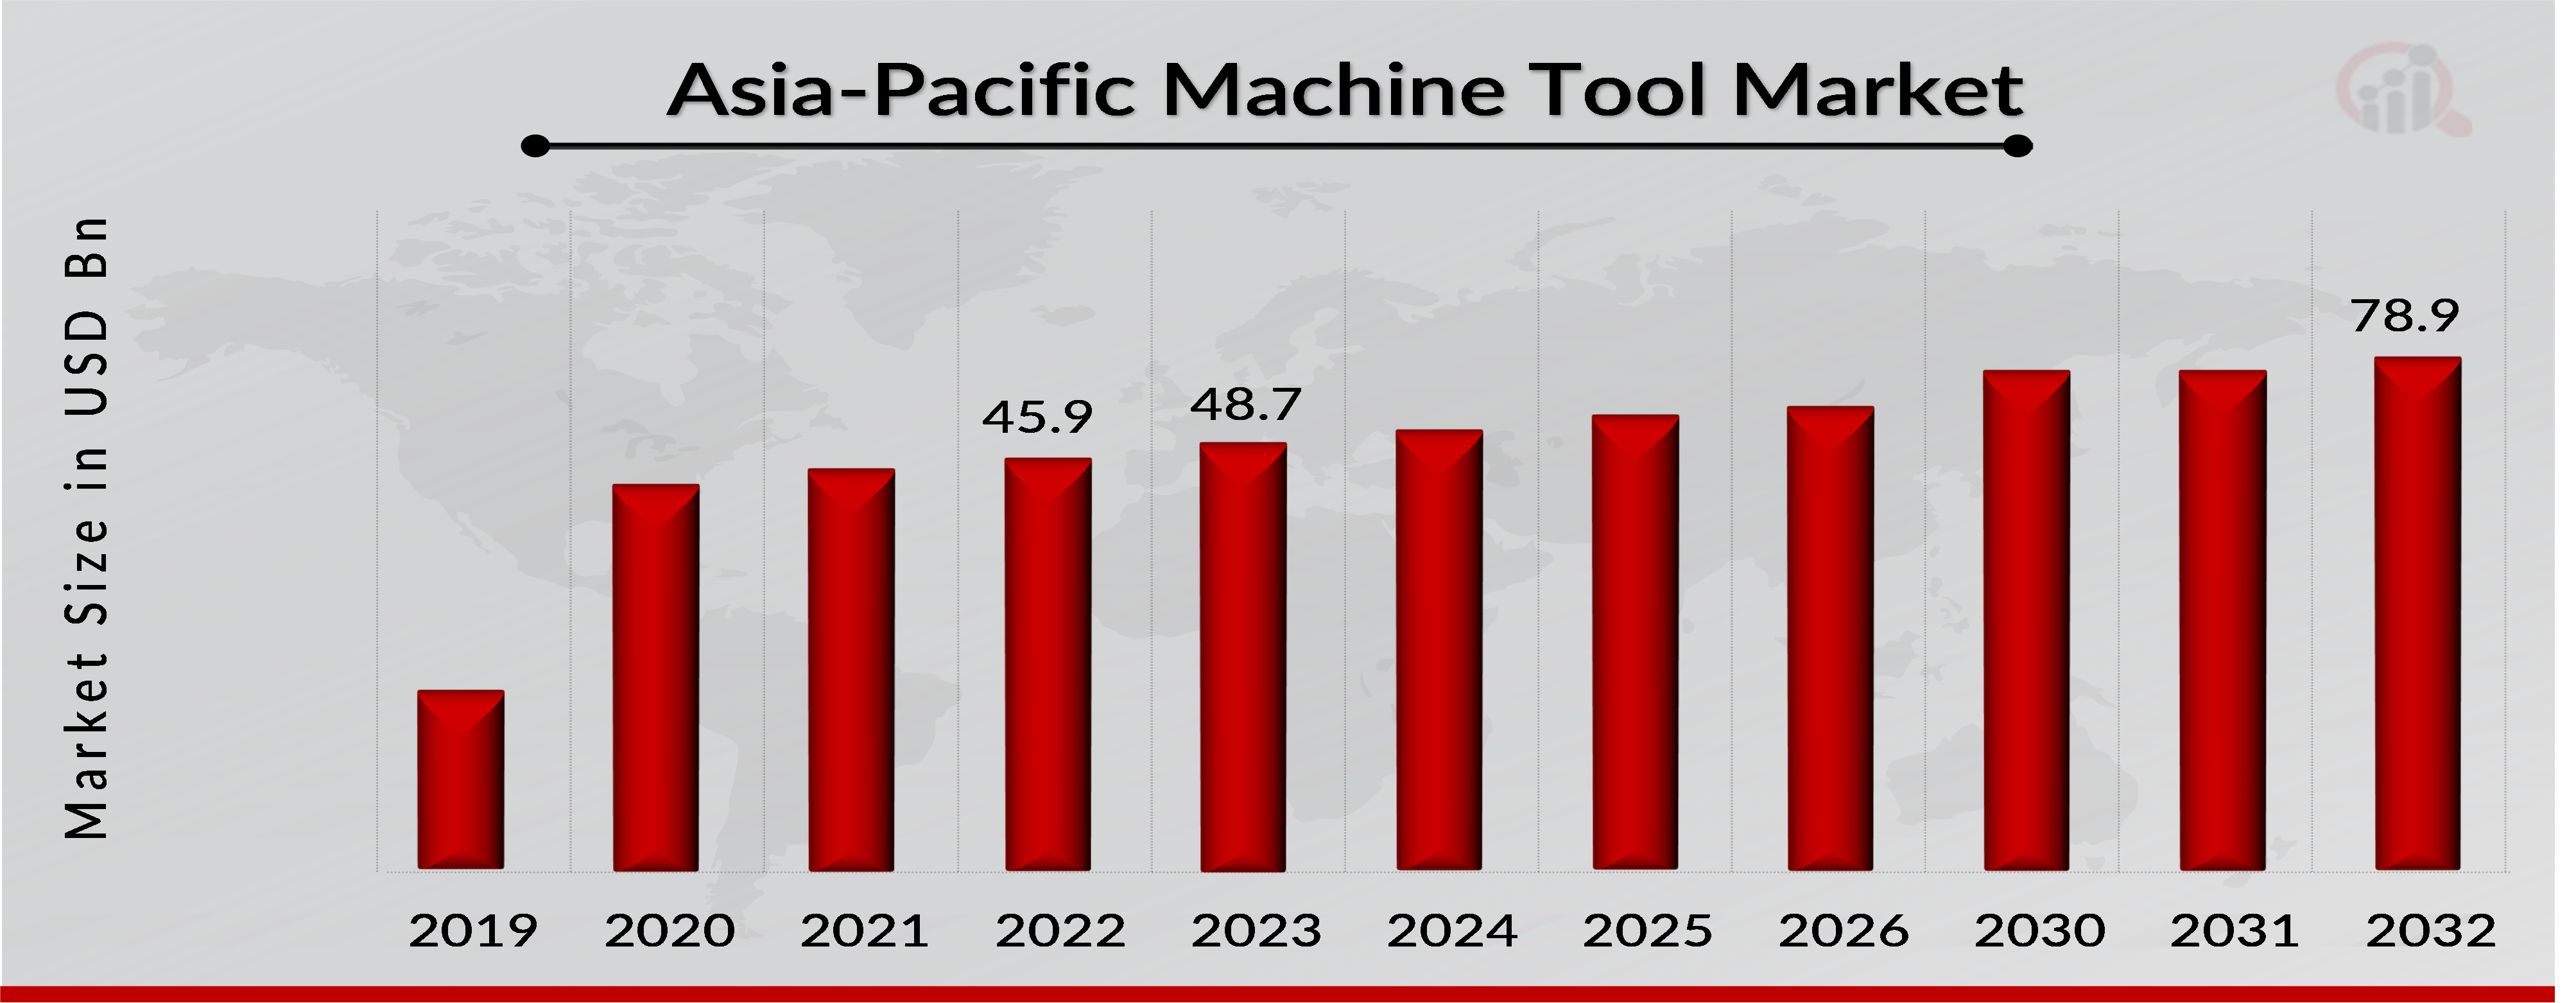 Asia-Pacific Machine Tool Market